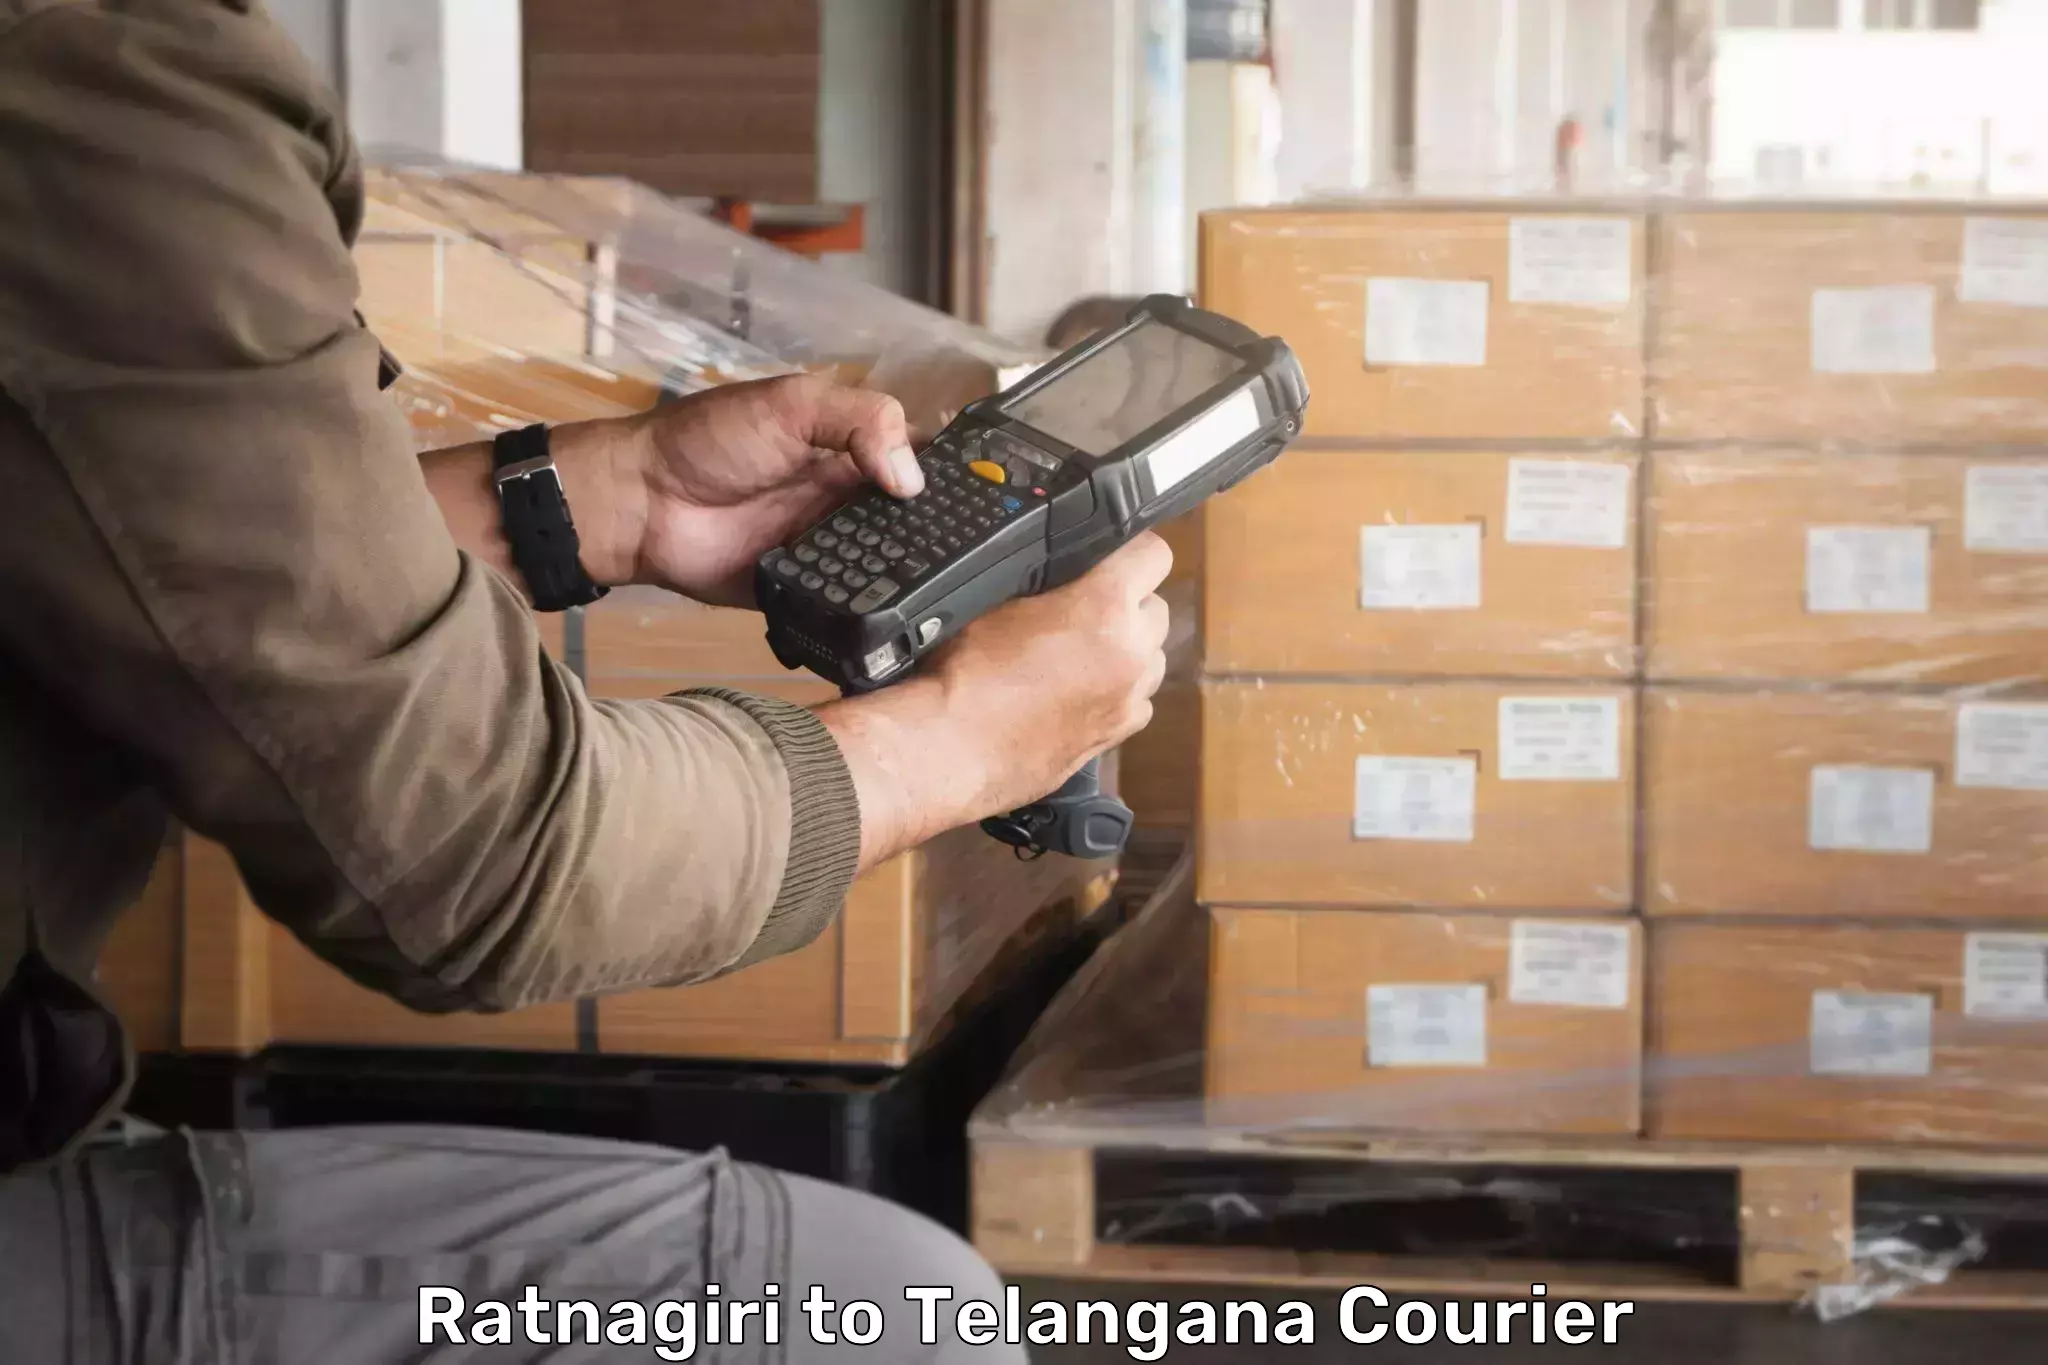 Express delivery capabilities Ratnagiri to Secunderabad